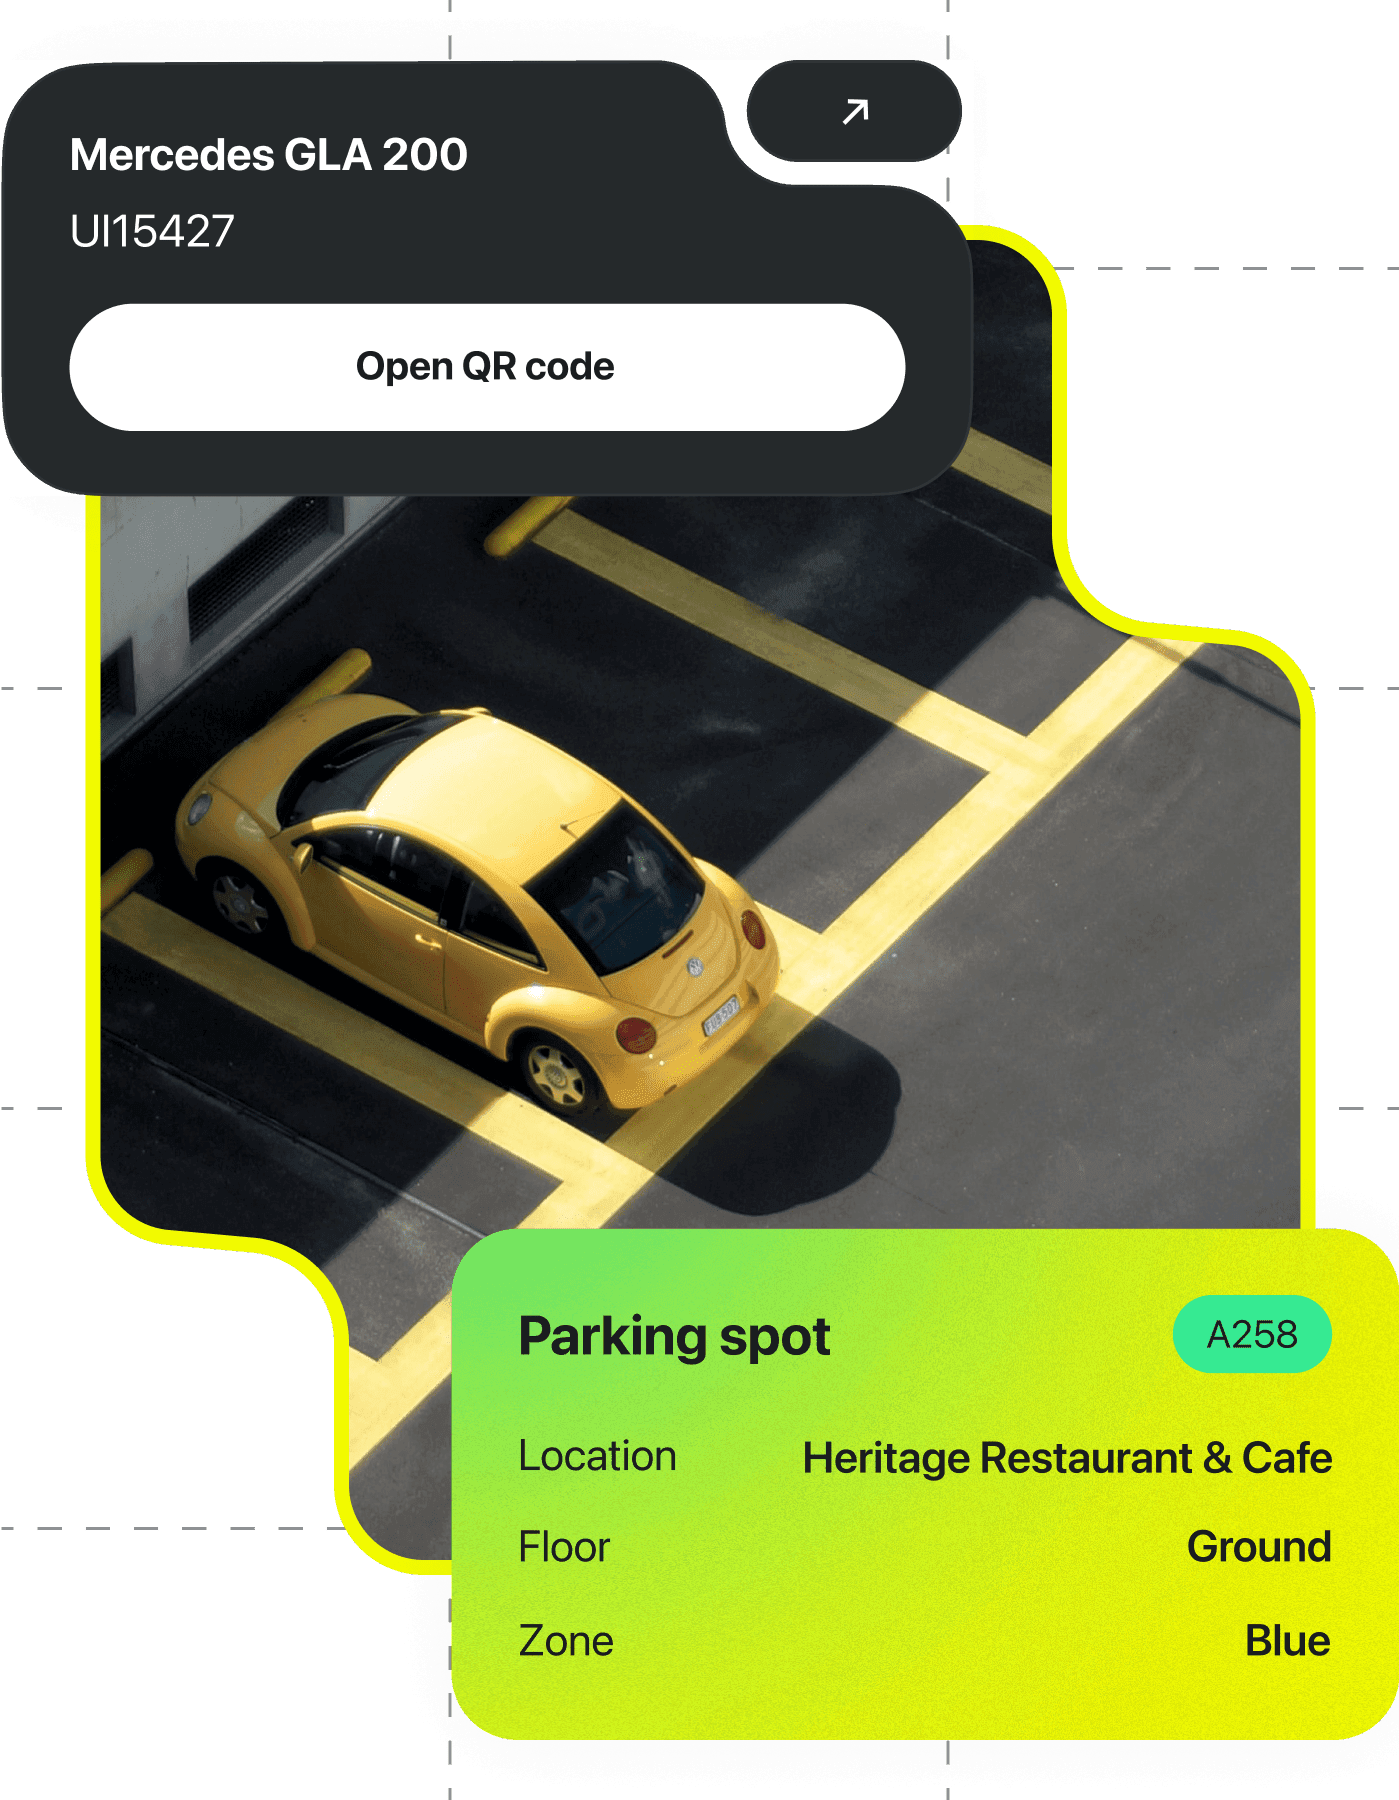 A smart urban mobile app